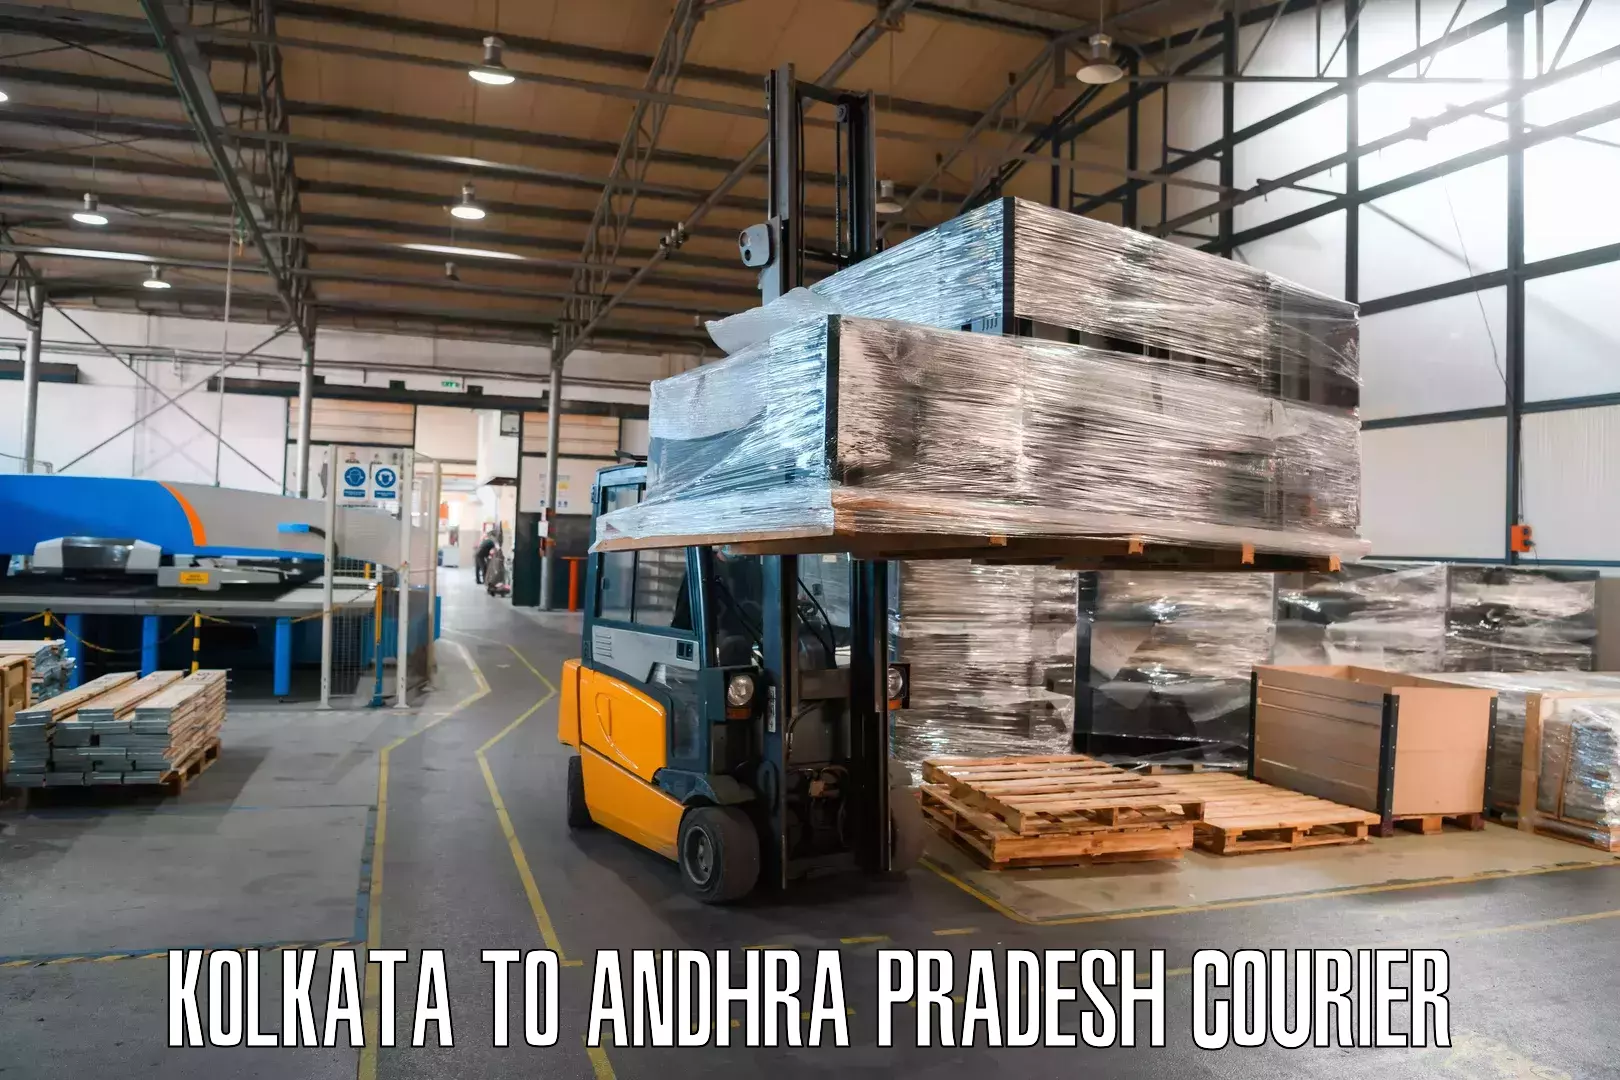 Global logistics network Kolkata to Andhra Pradesh